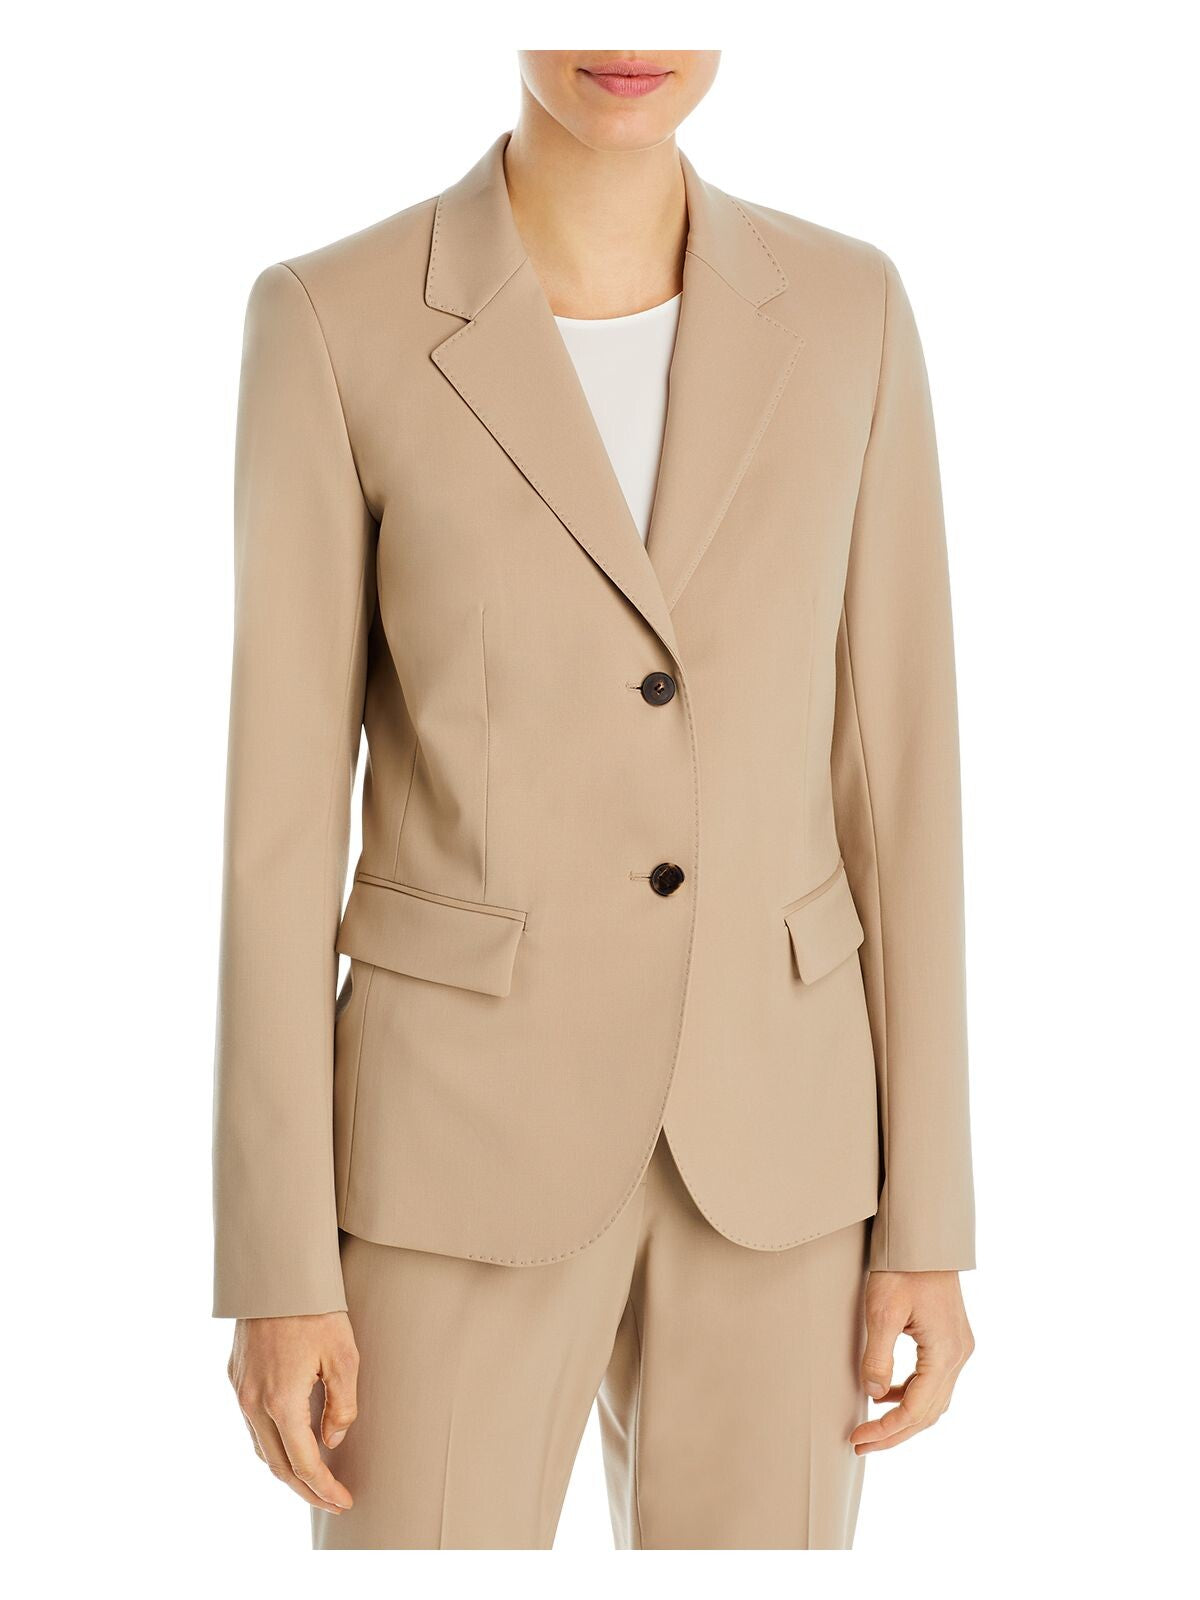 LAFAYETTE 148 NEW YORK Womens Beige Pocketed Wear To Work Blazer Jacket 2